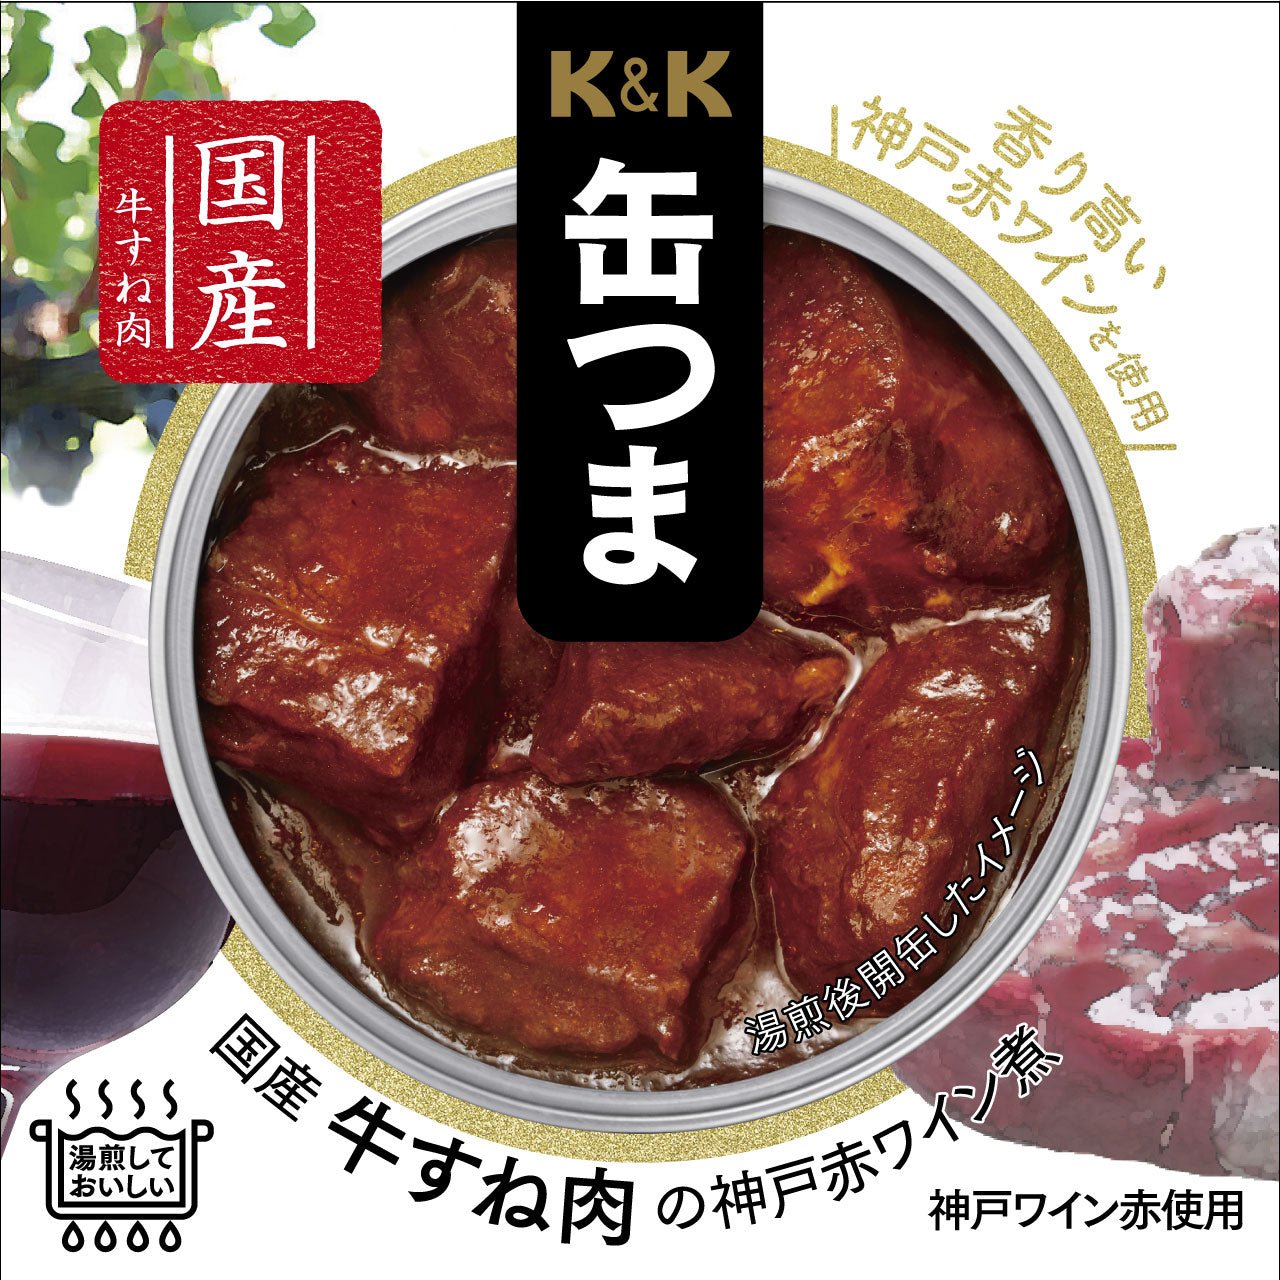 K & k can koizuma bœuf domestique sune viande kobe rouge bouilli